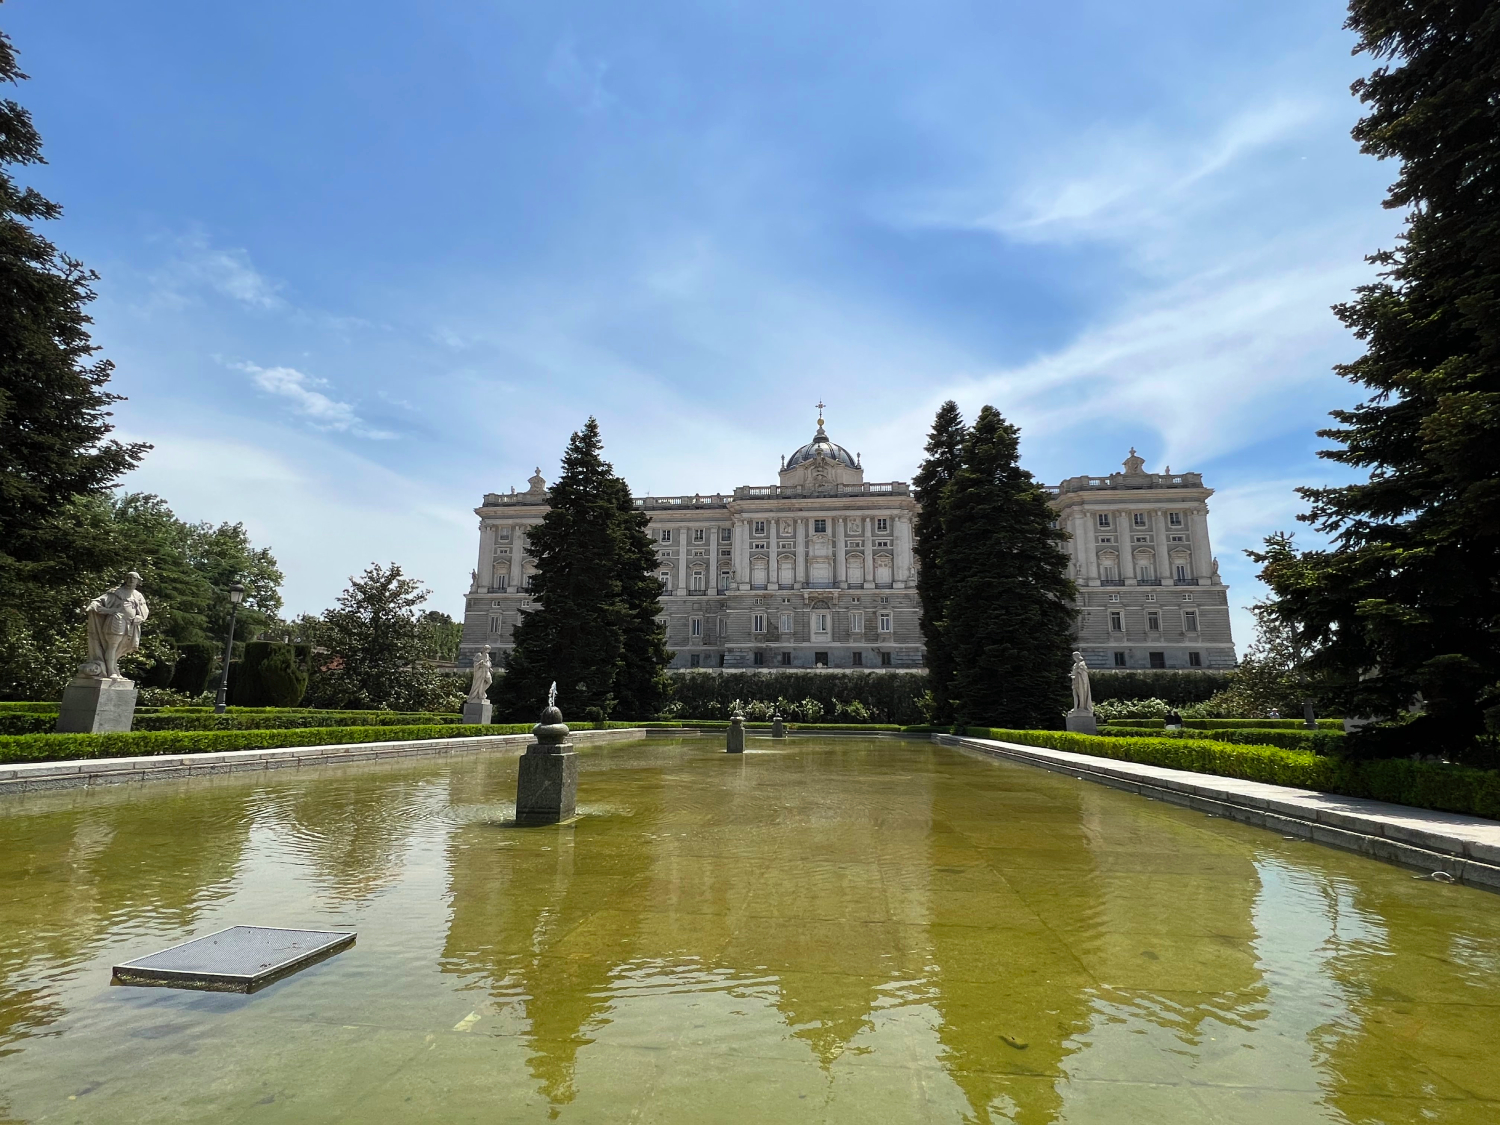 Palacio Real, Madrid, Spain